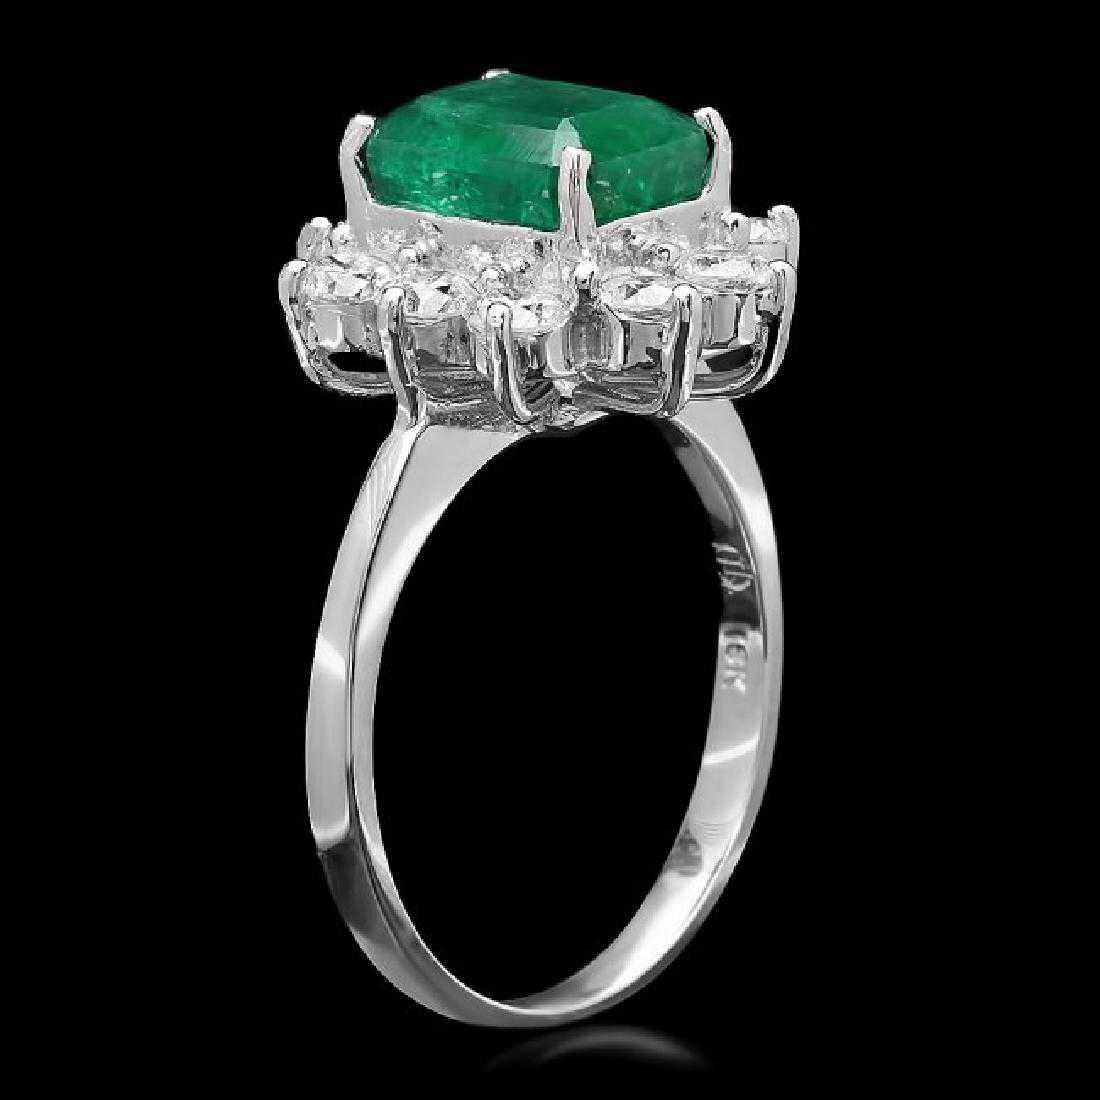 14K White Gold 2.32ct Emerald and 1.13ct Diamond Ring